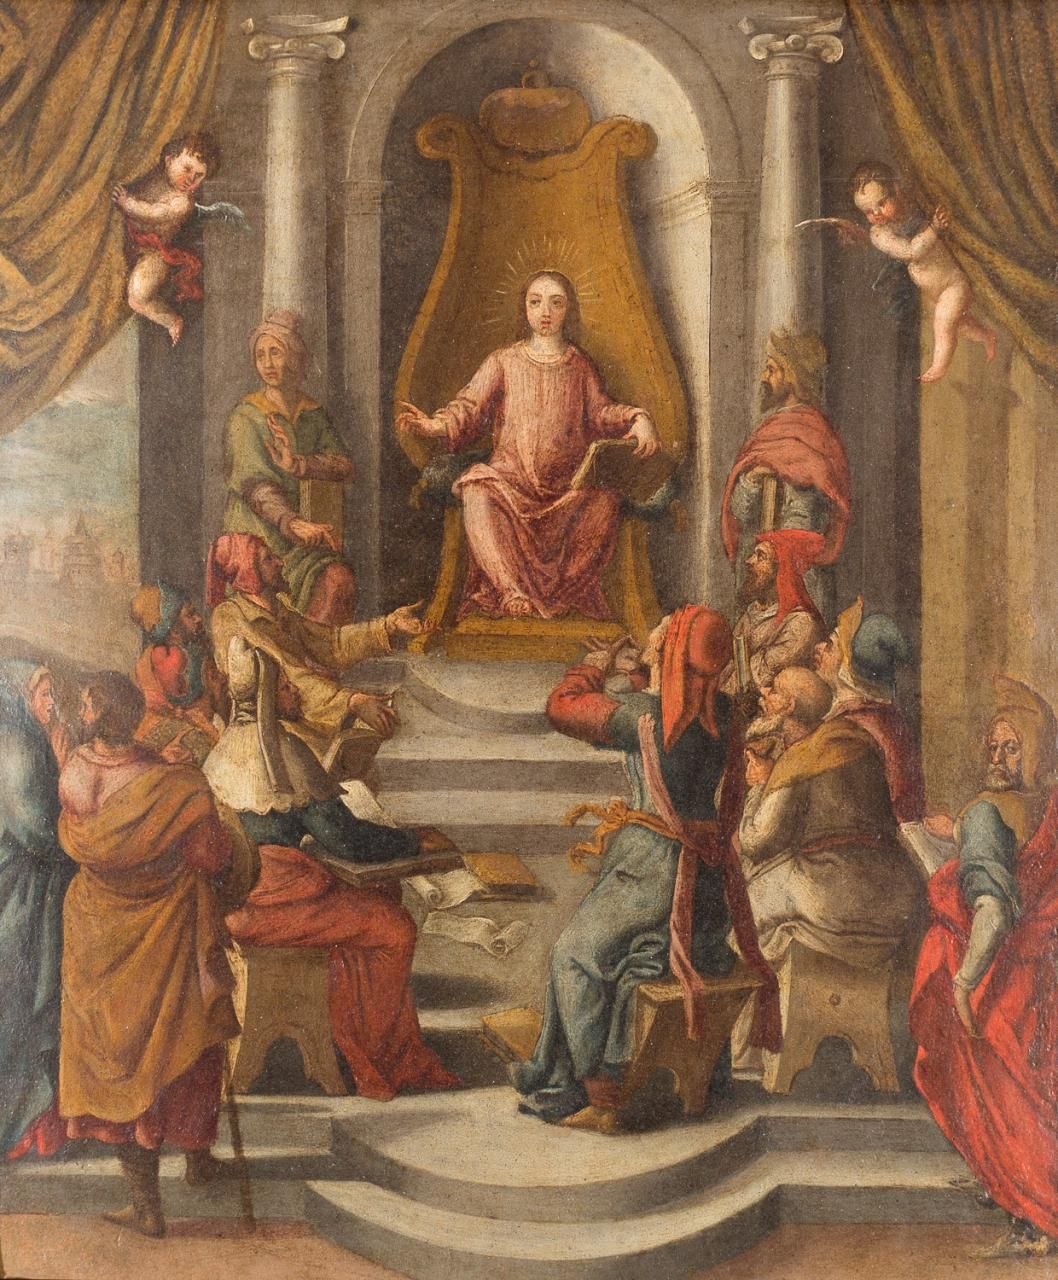 ESCUELA FLAMENCA, S. XVII 医生中的耶稣
铜上油彩
38 x 32 cm